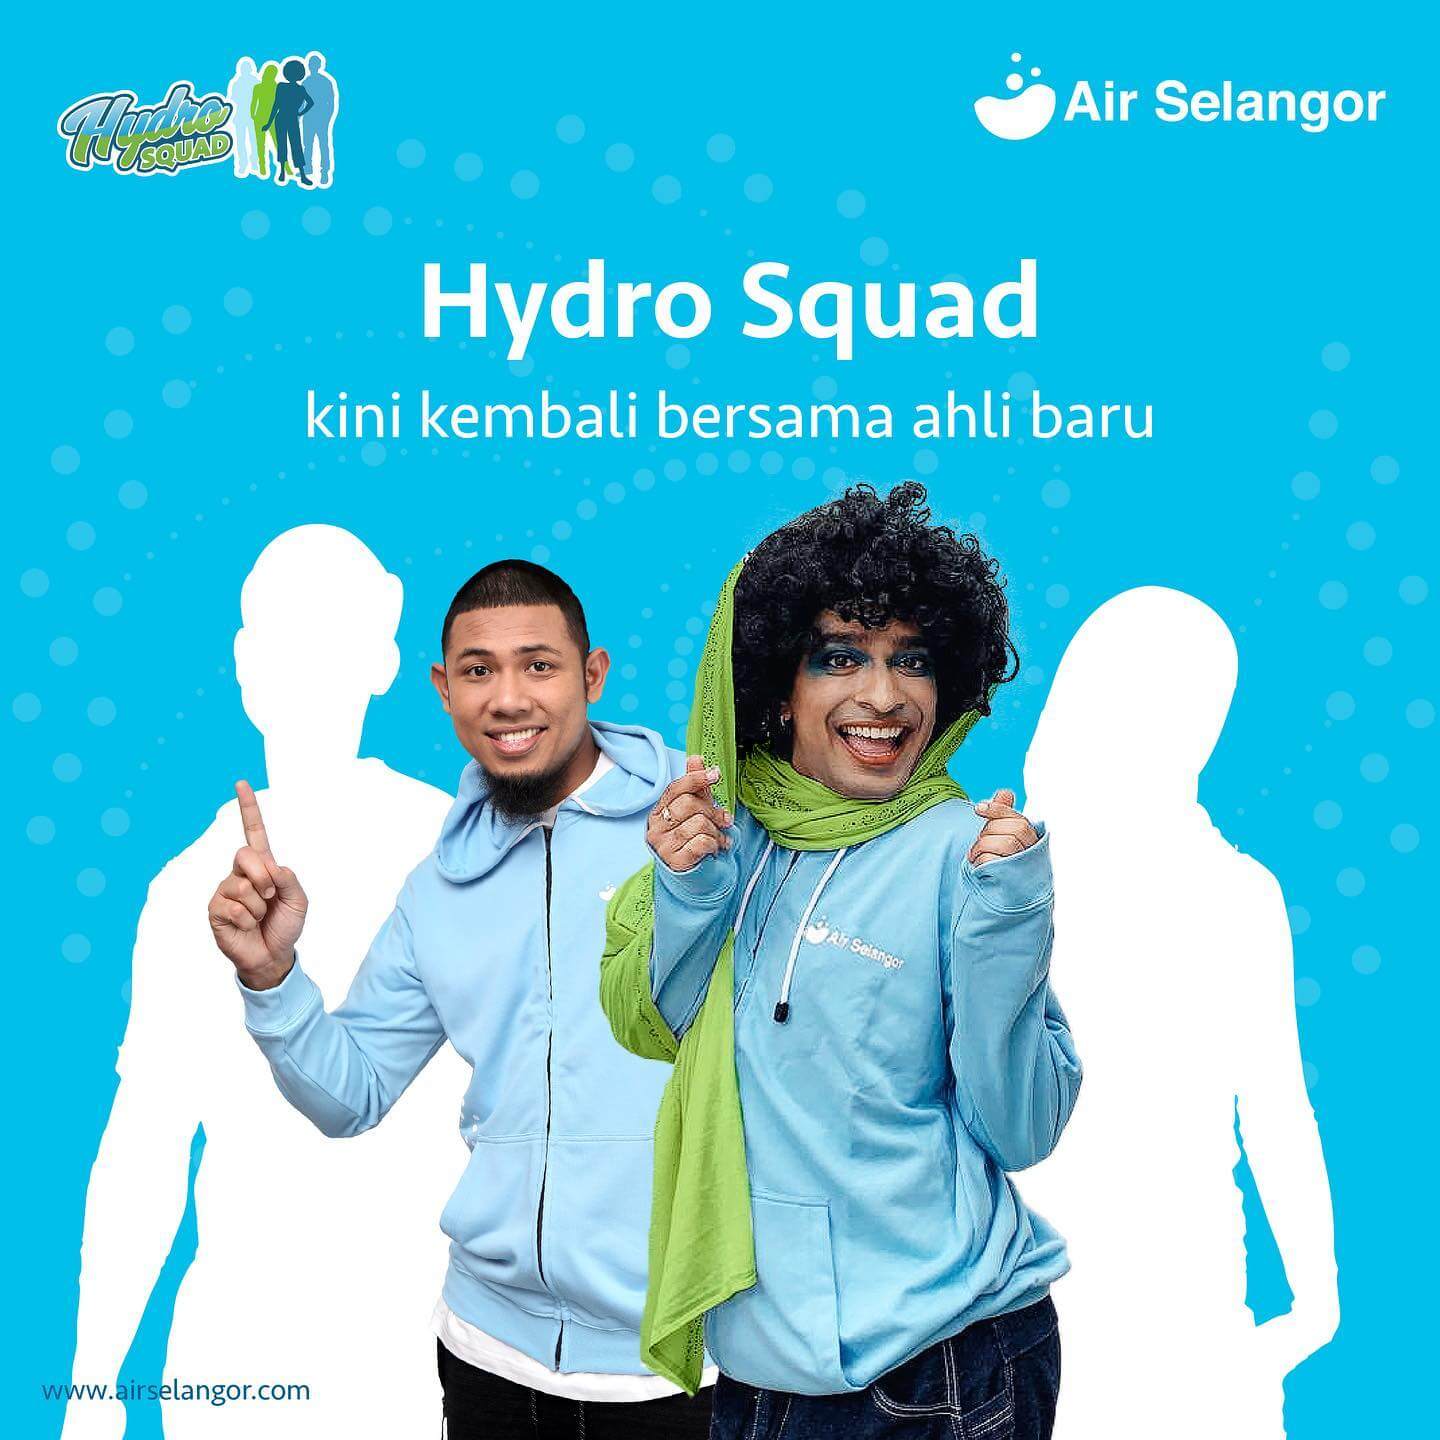 Hydrosquad Member Announcement Hydro Hub Air Selangor